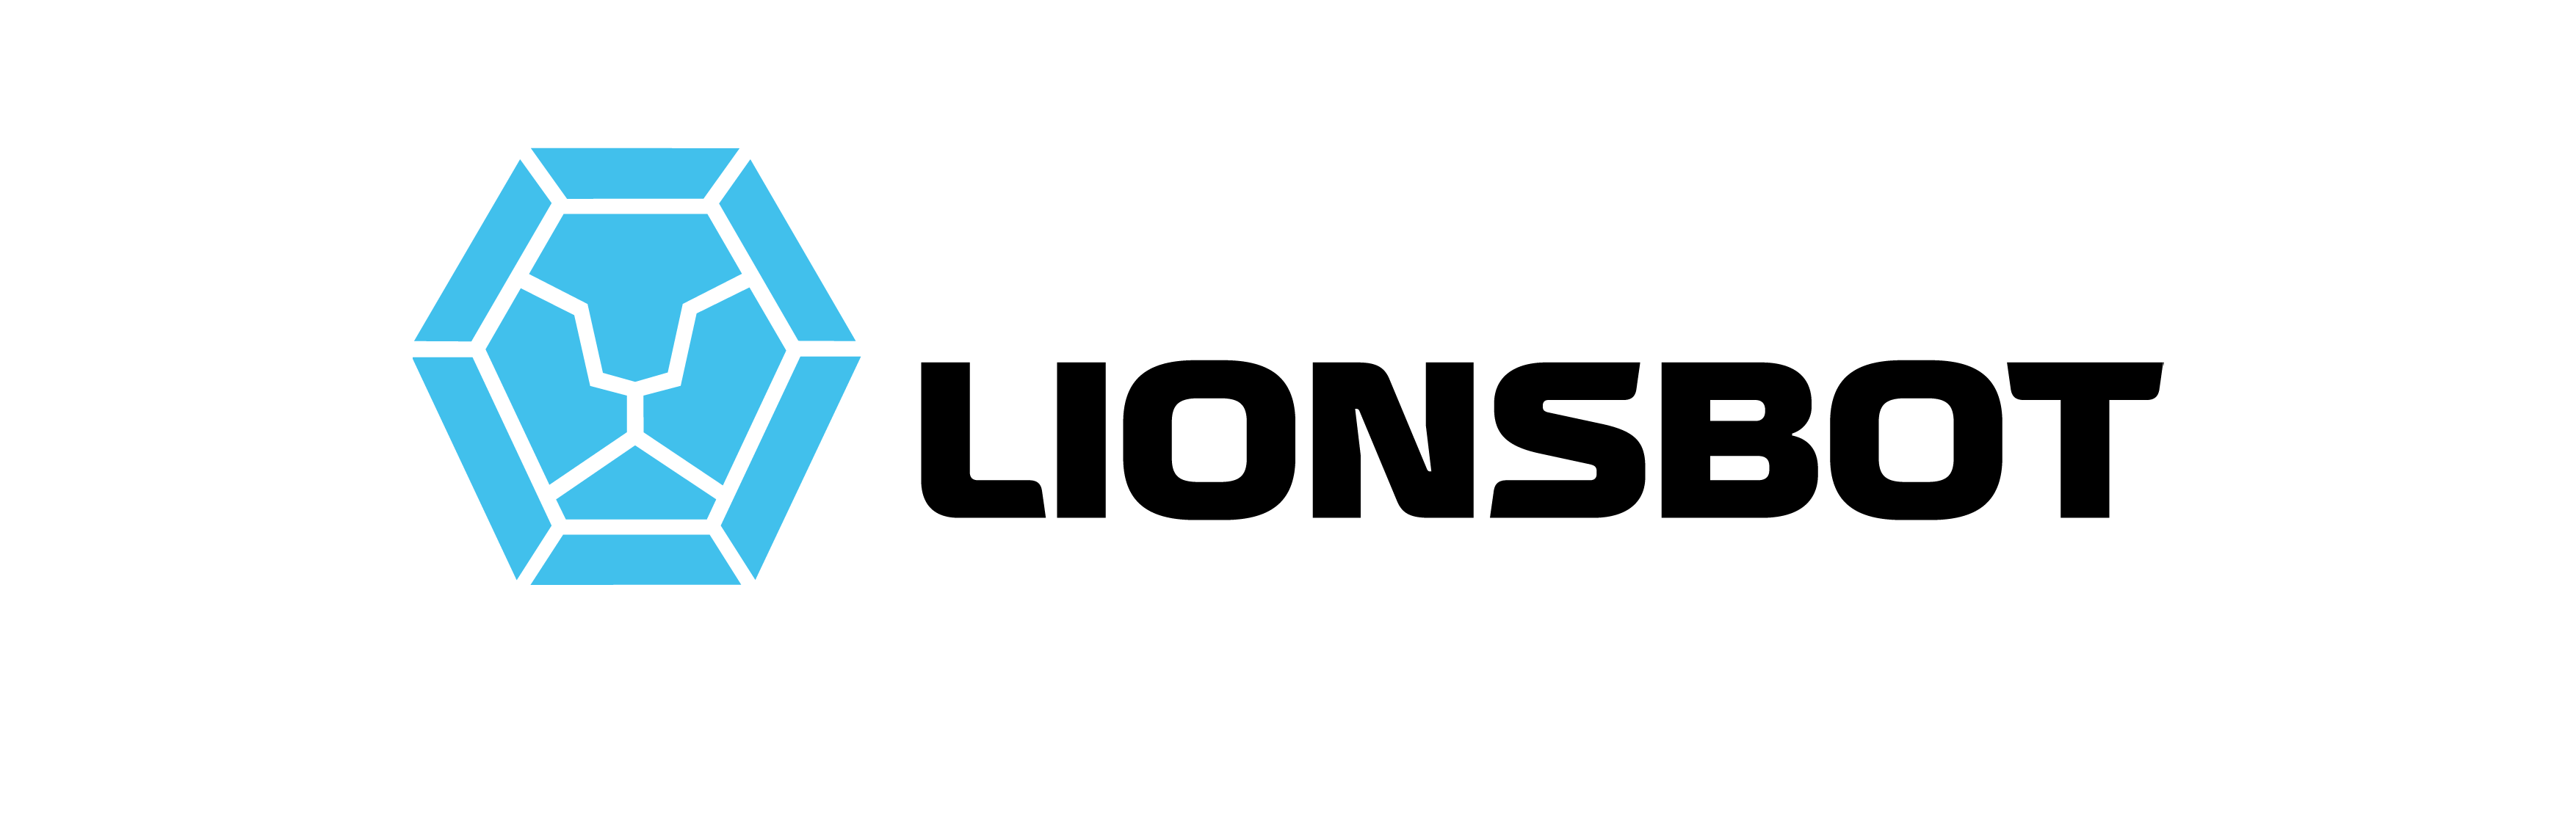 Lionsbot International